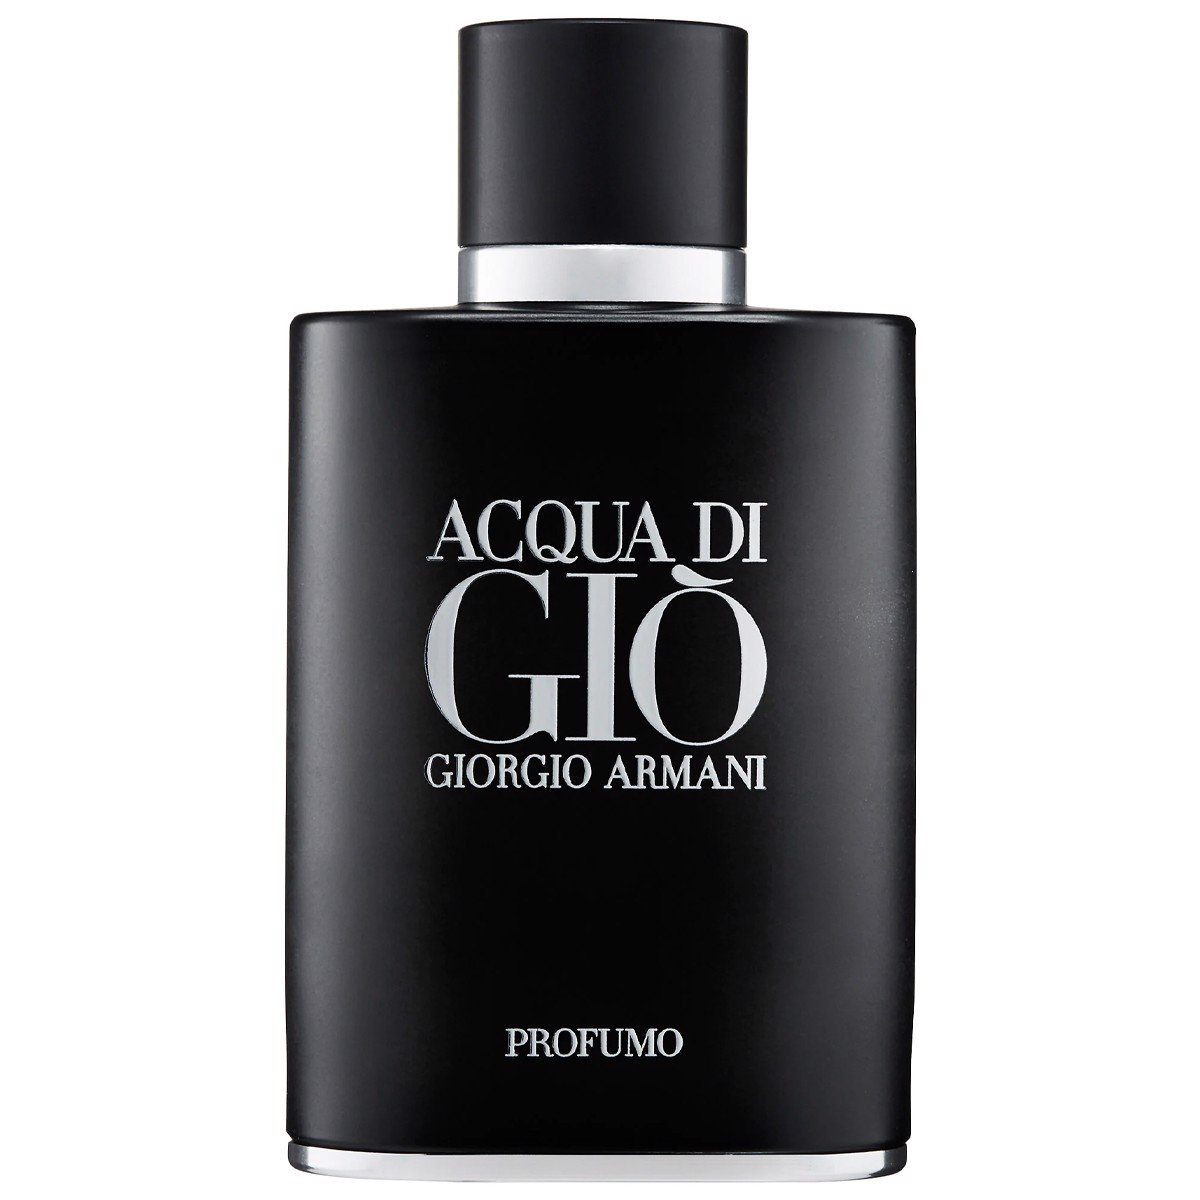 Giorgio Armani - Tiến Perfumes